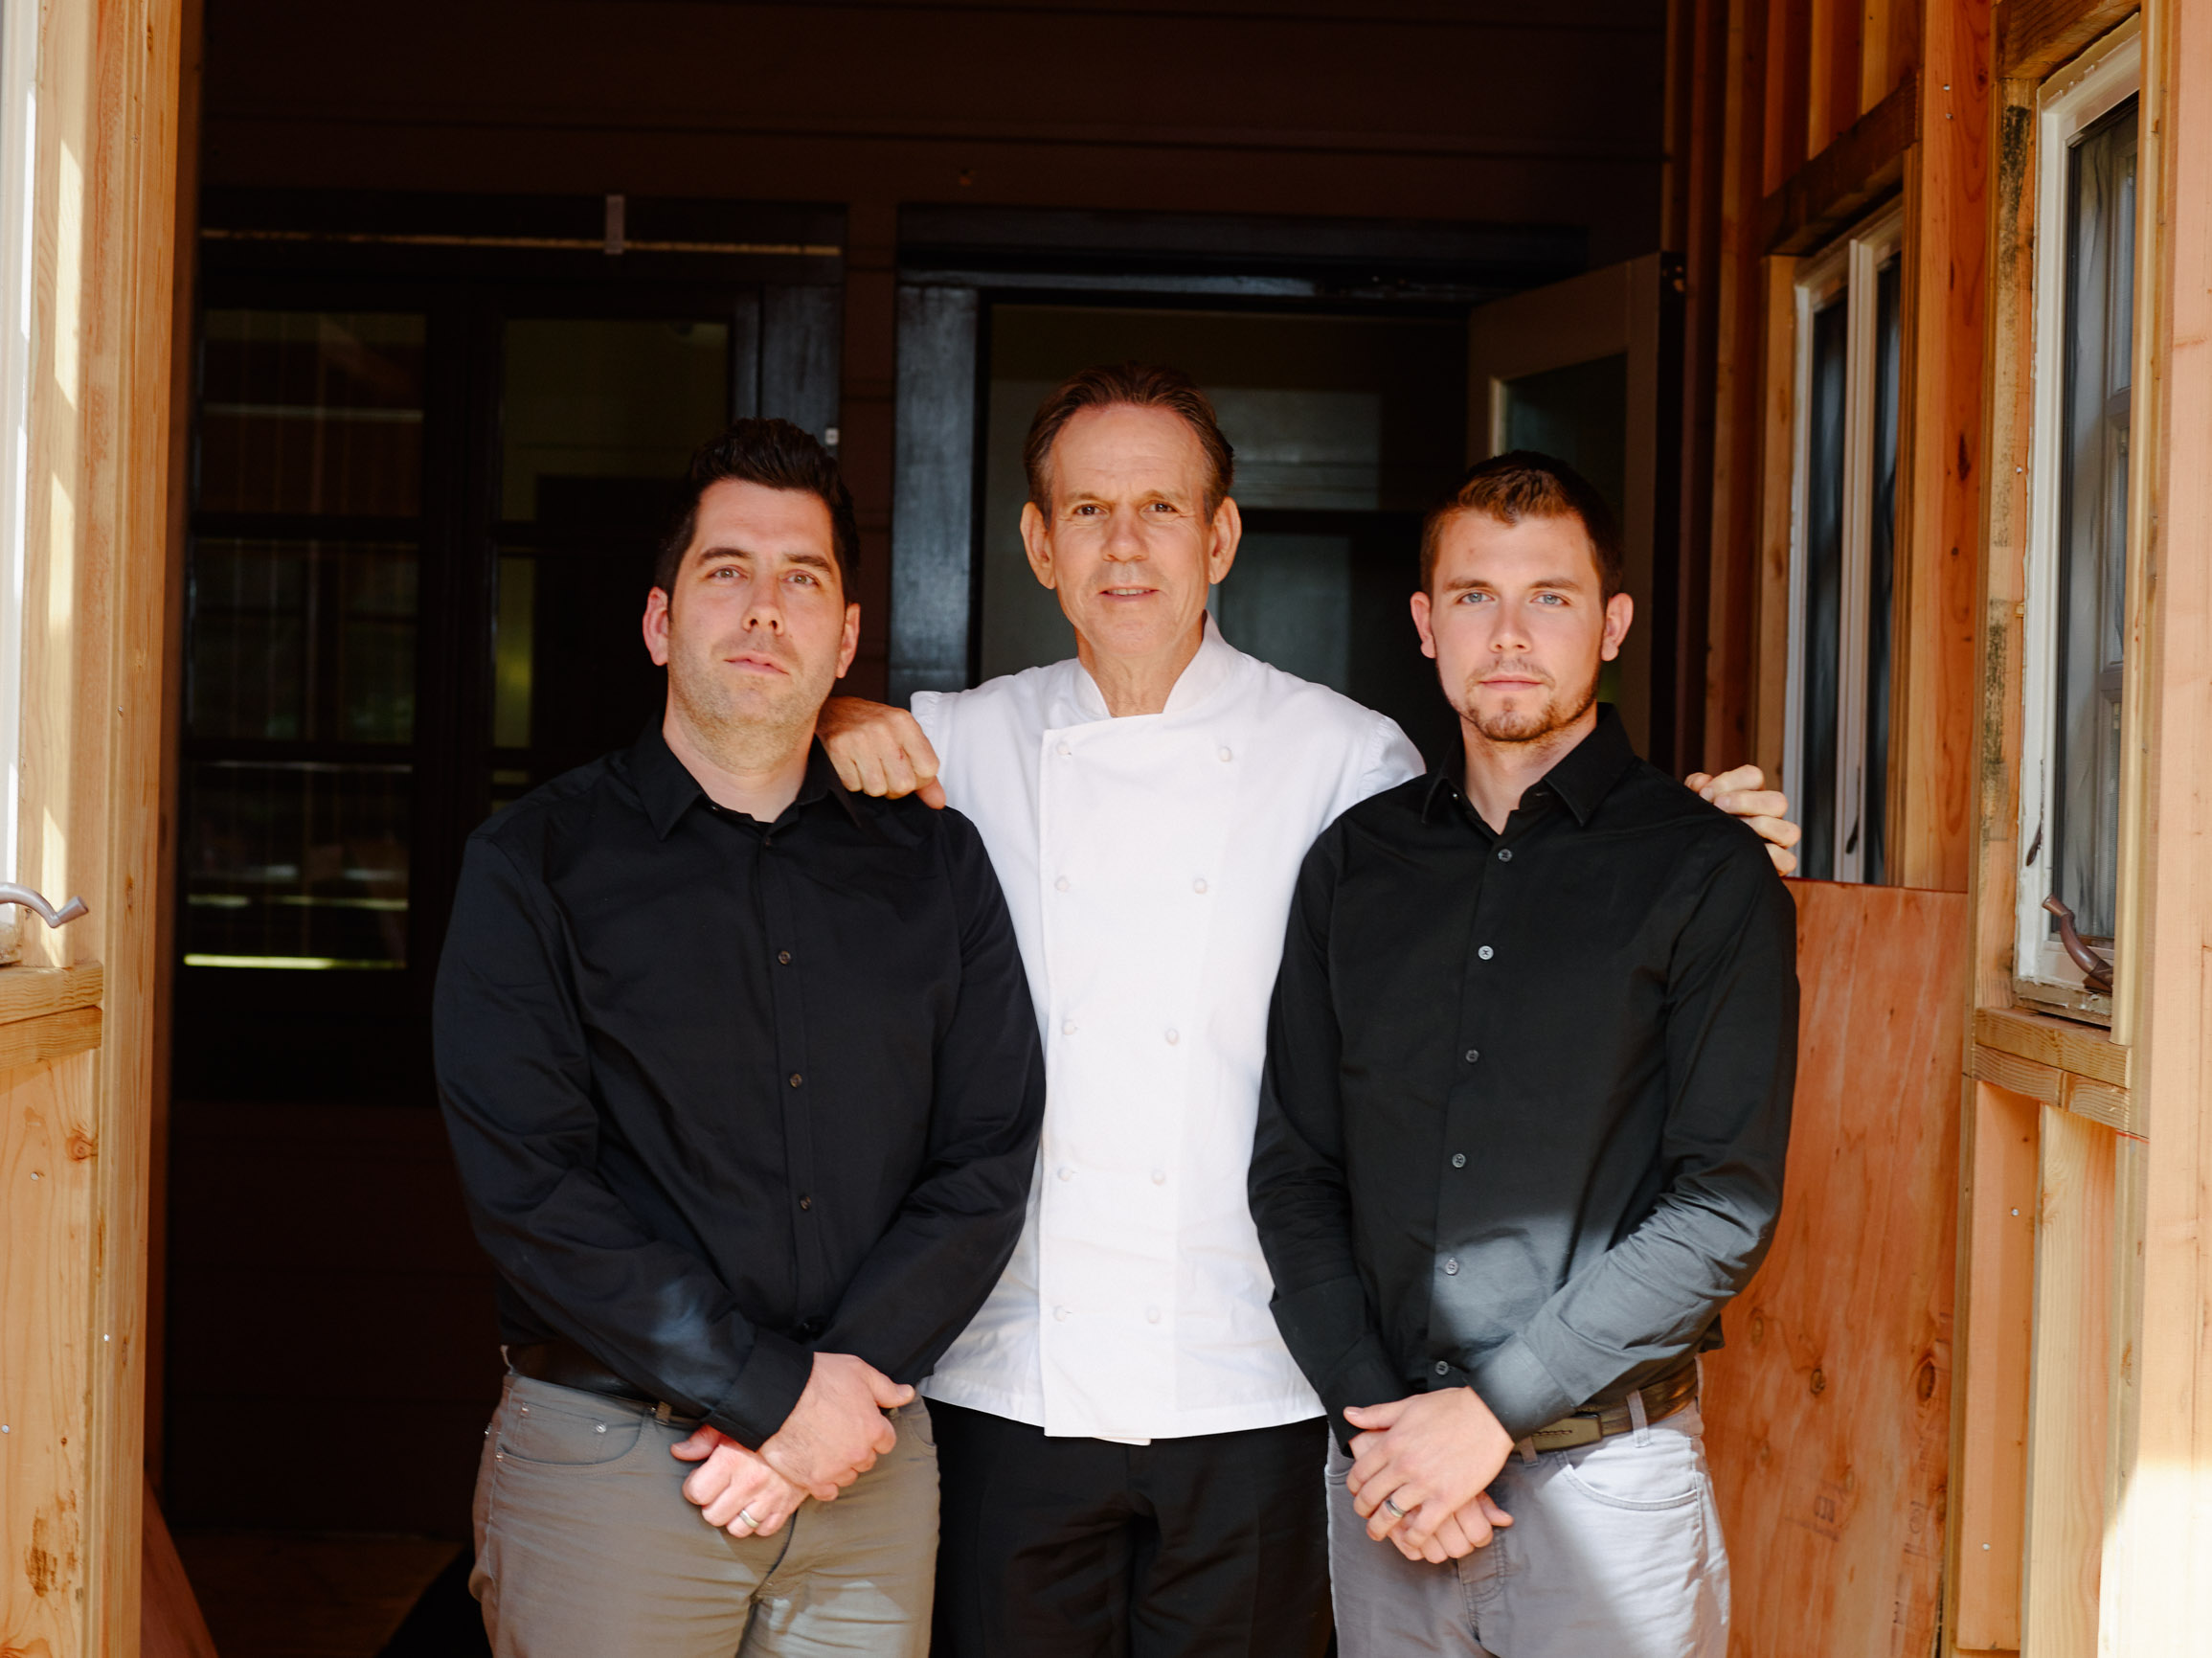 Thomas Keller, Thomas Keller Restaurant Group with Patrick Flynn & Duncan Young, Envelope A+D